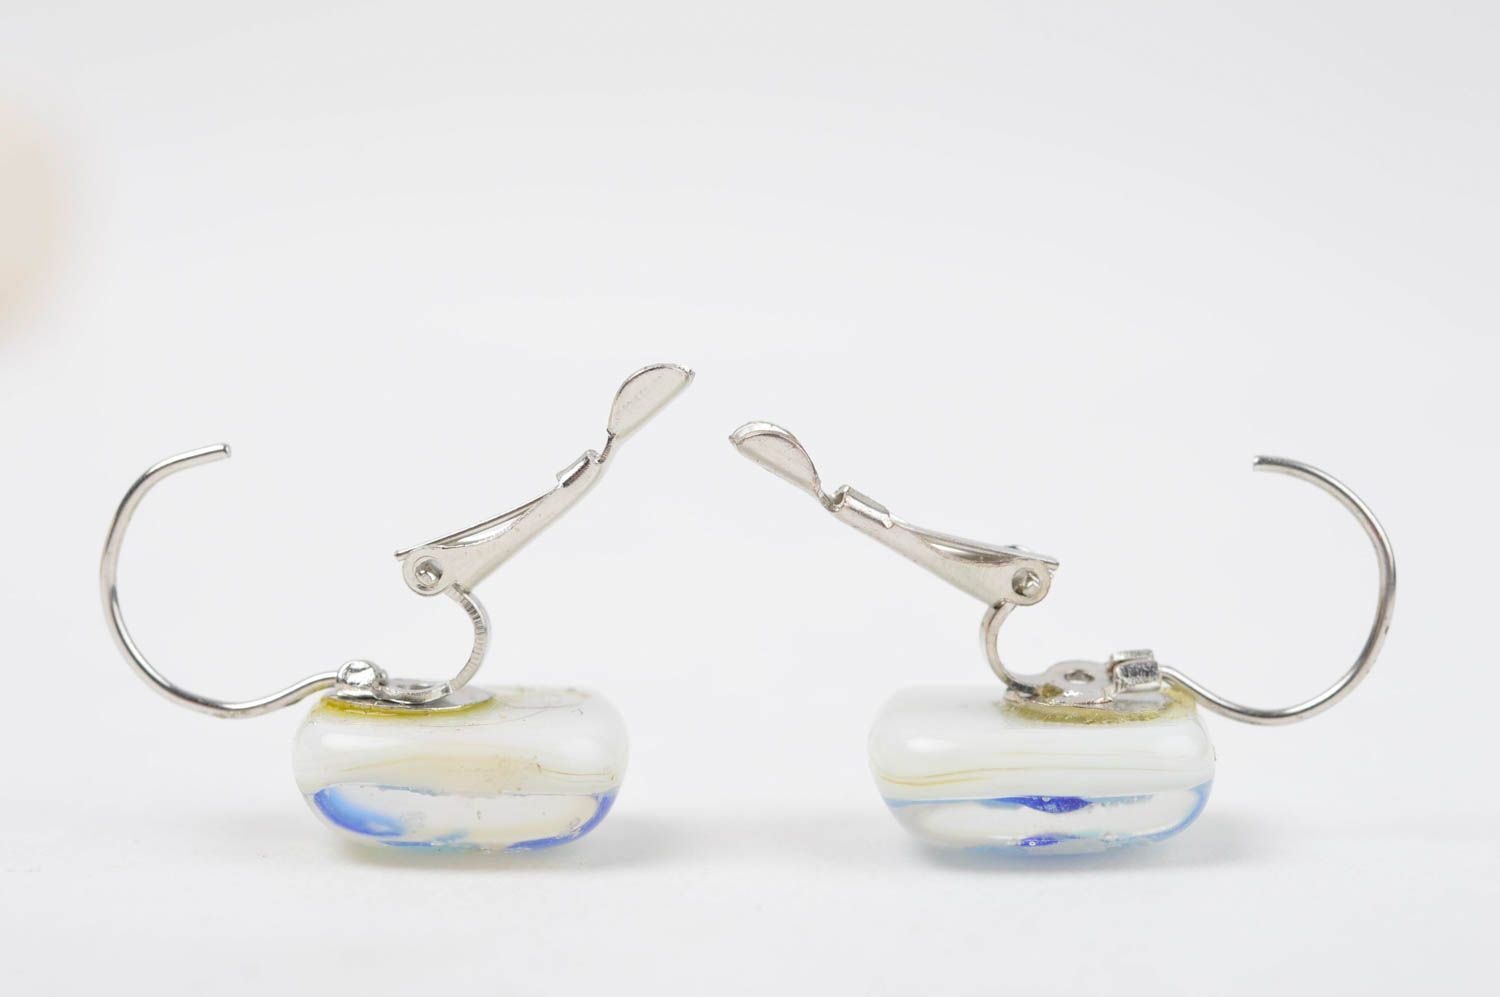 Beautiful handmade glass earrings glass fusing cool jewelry designs gift ideas photo 5